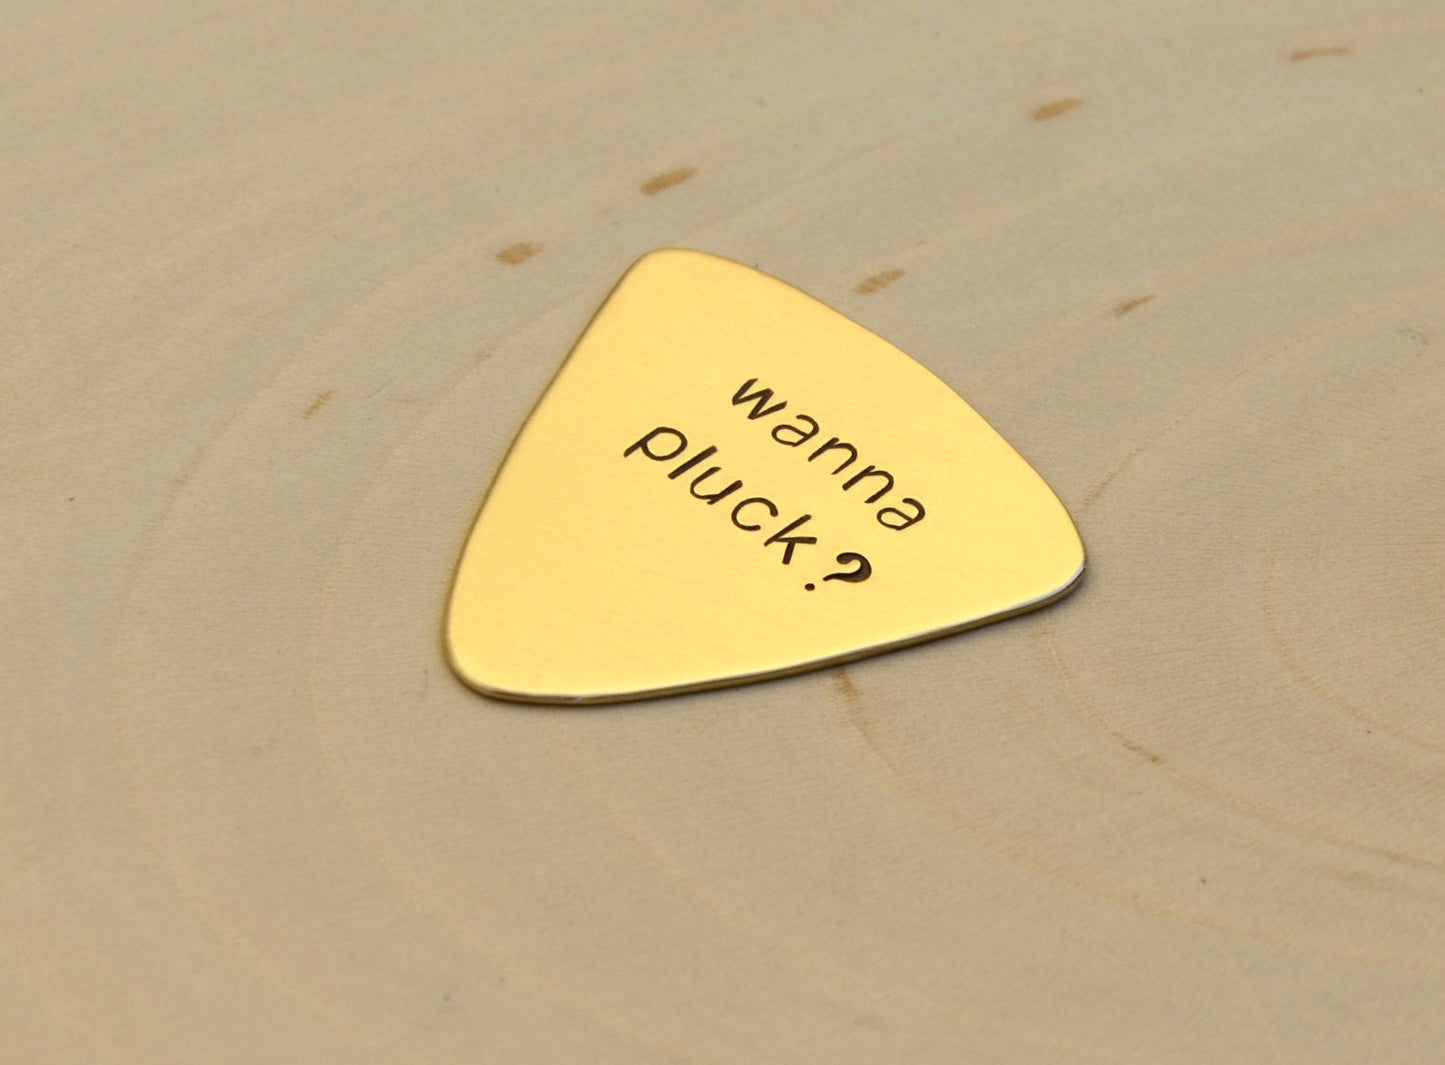 Wanna Pluck bronze triangular style guitar pick